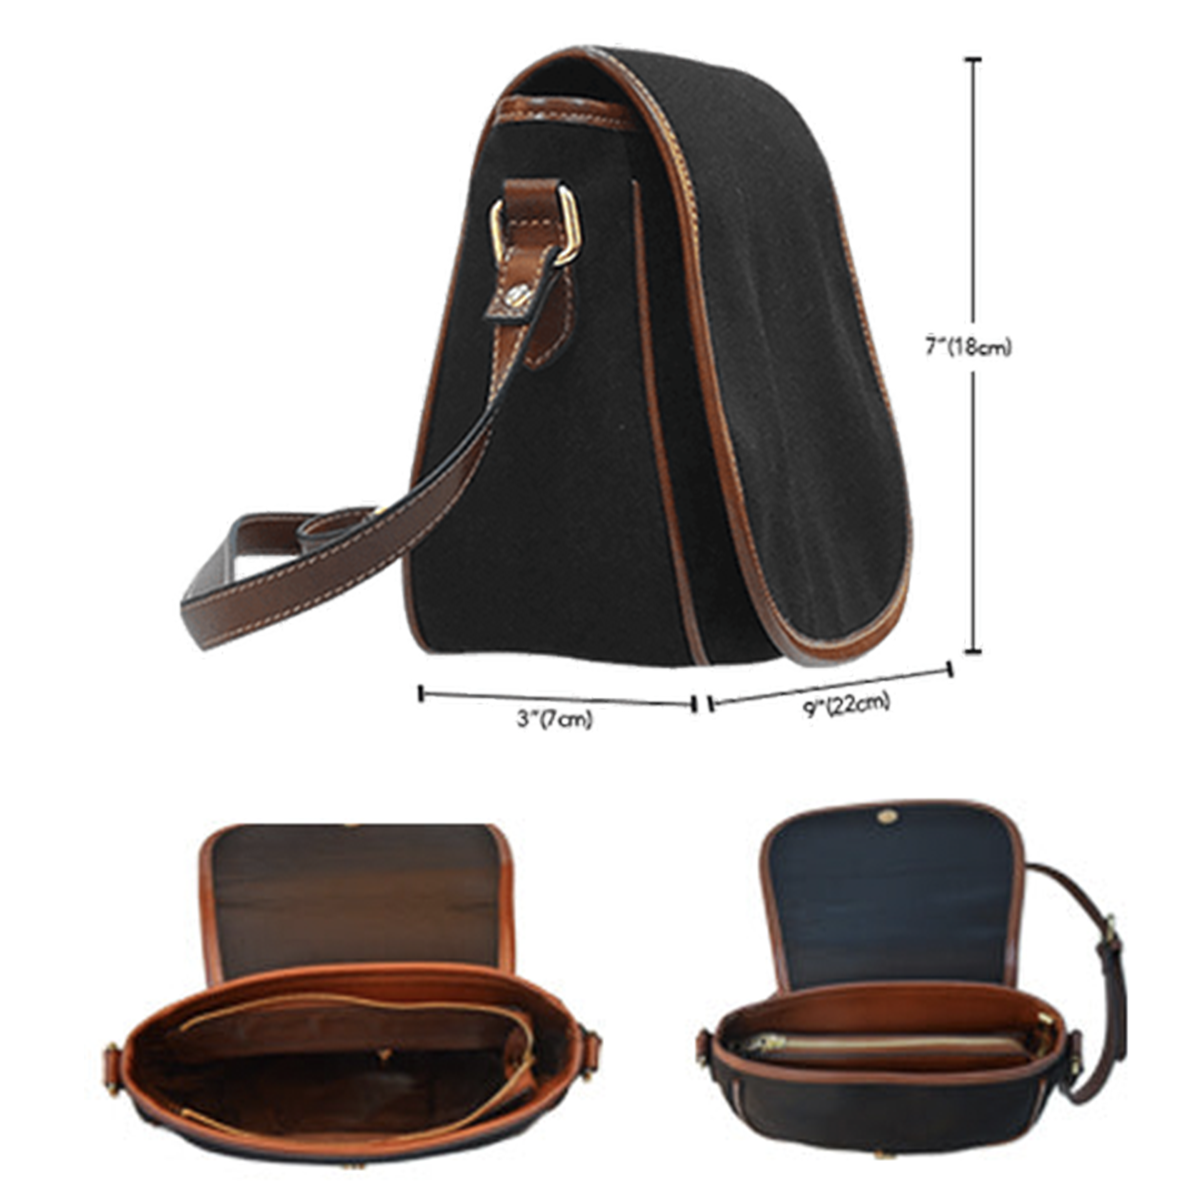 MacQuarrie 03 Tartan Saddle Handbags